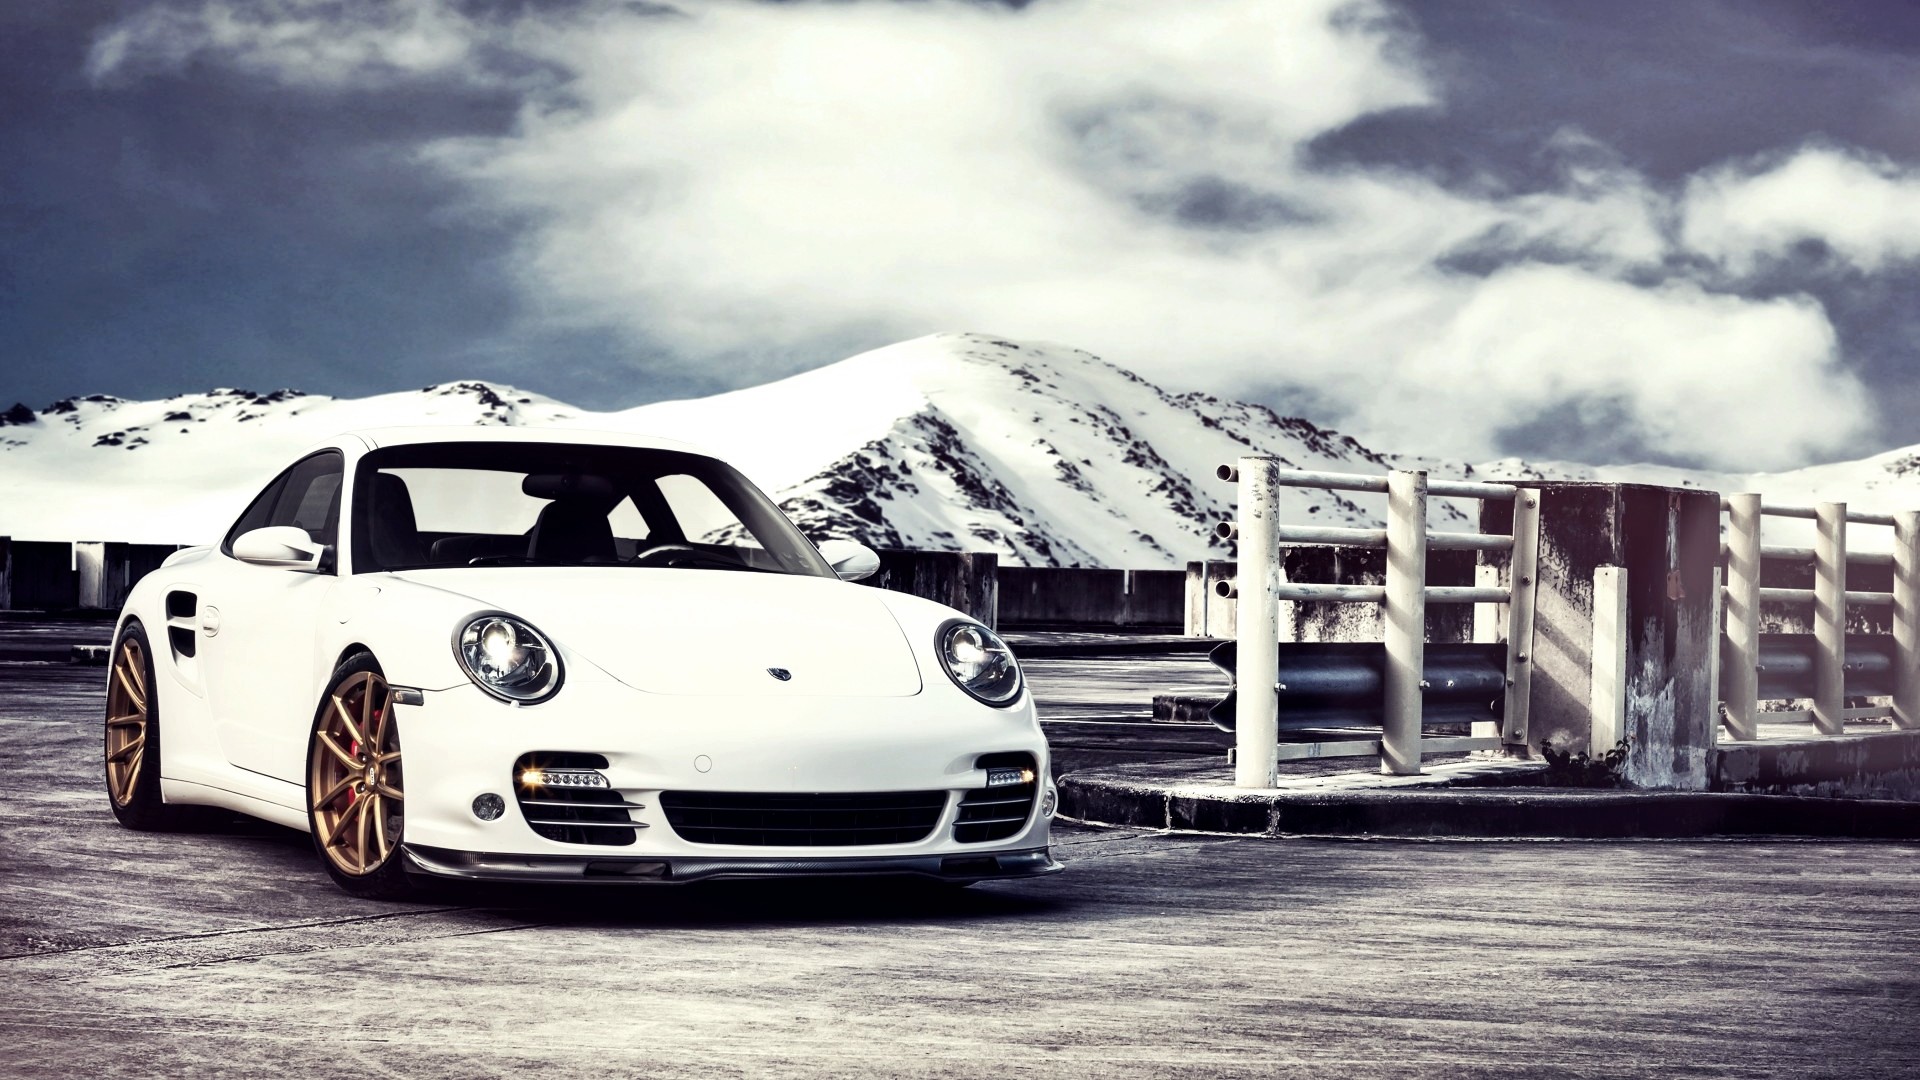 Porsche Turbo Car HD Desktop Wallpaper This